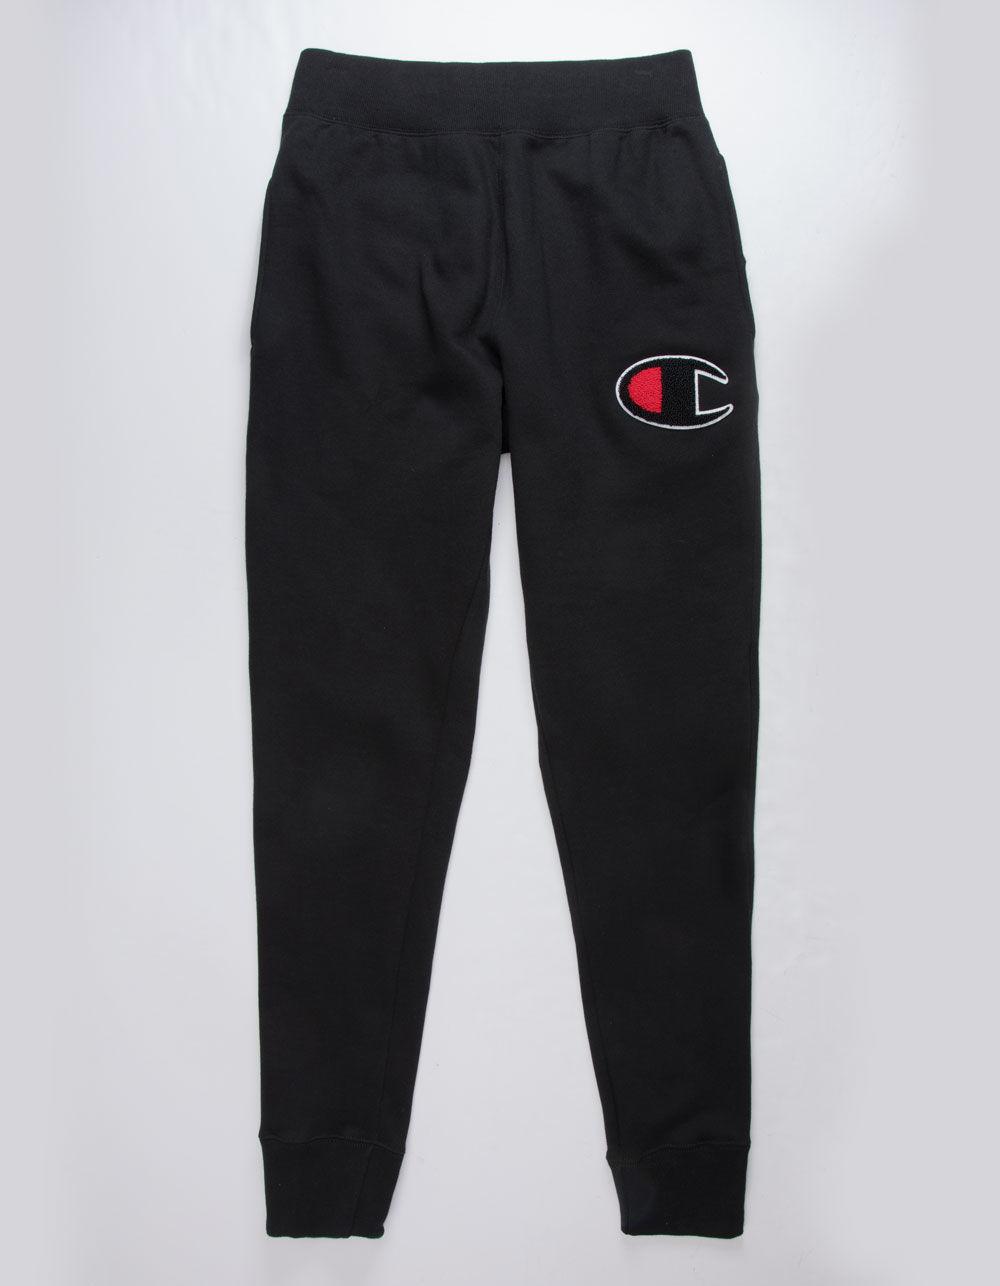 Lyst - Champion Reverse Weave Big C Chenille Logo Black Mens Sweatpants